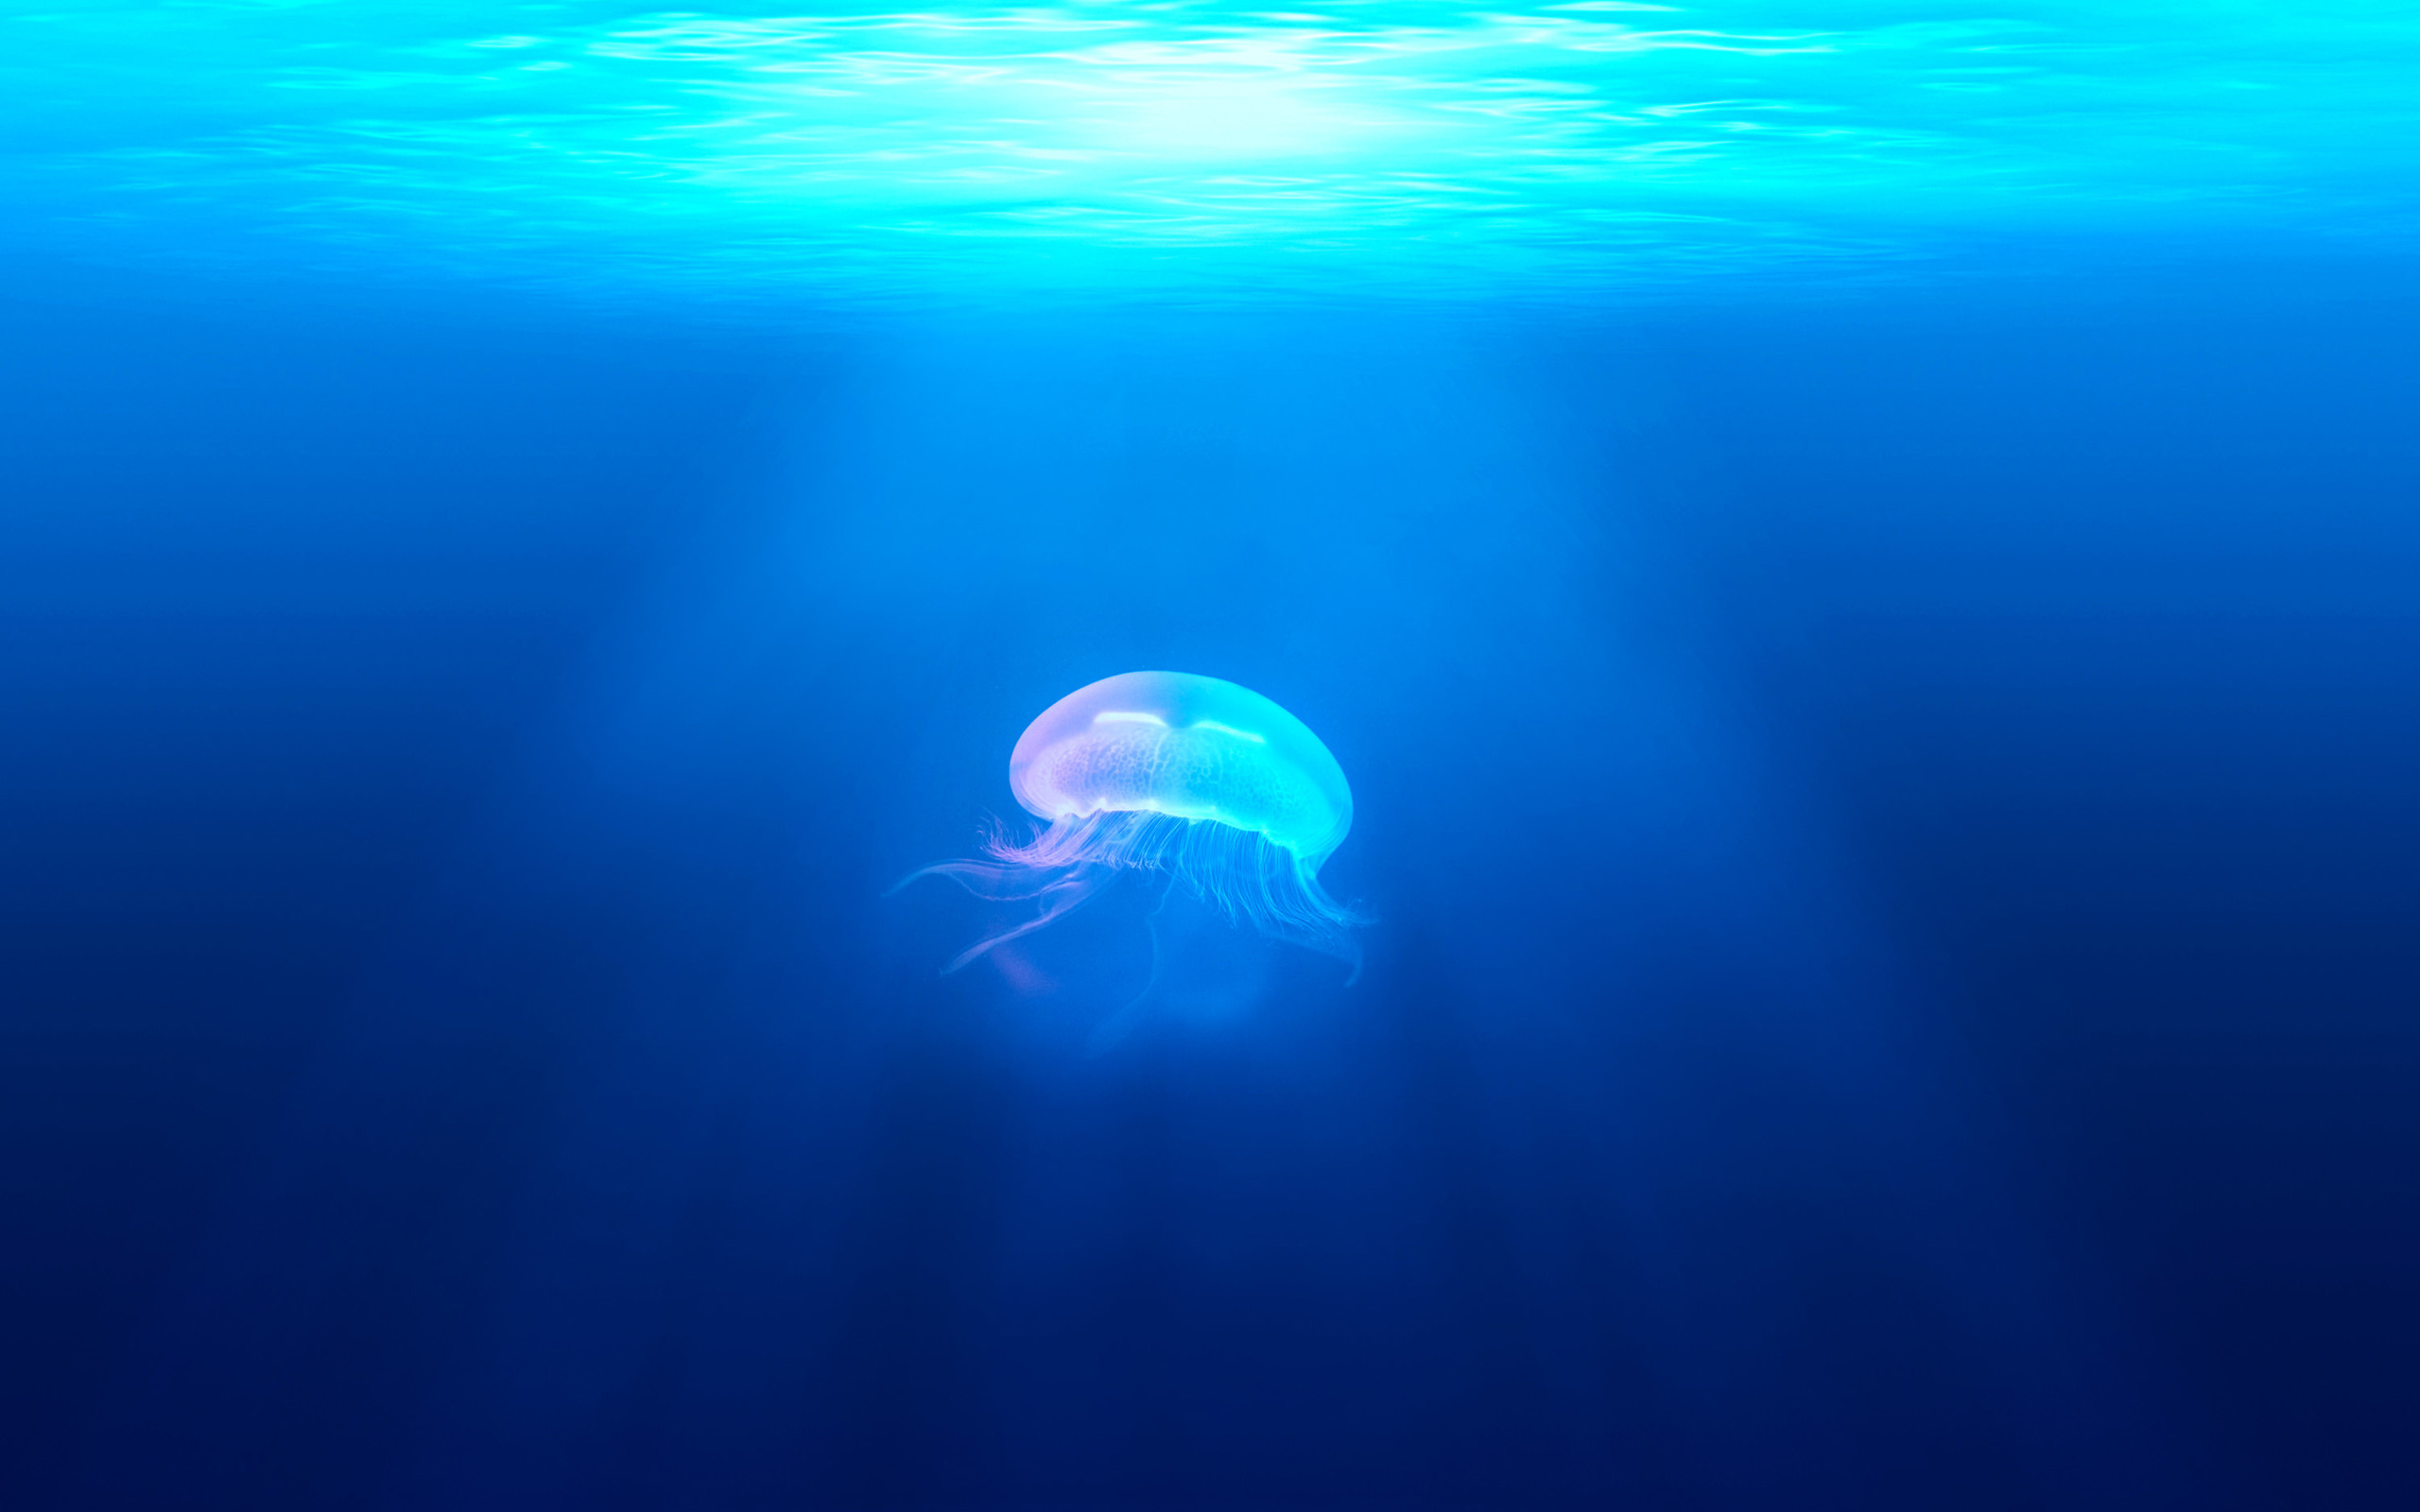 Jellyfish Underwater HD9335317257 - Jellyfish Underwater HD - Underwater, The, Jellyfish